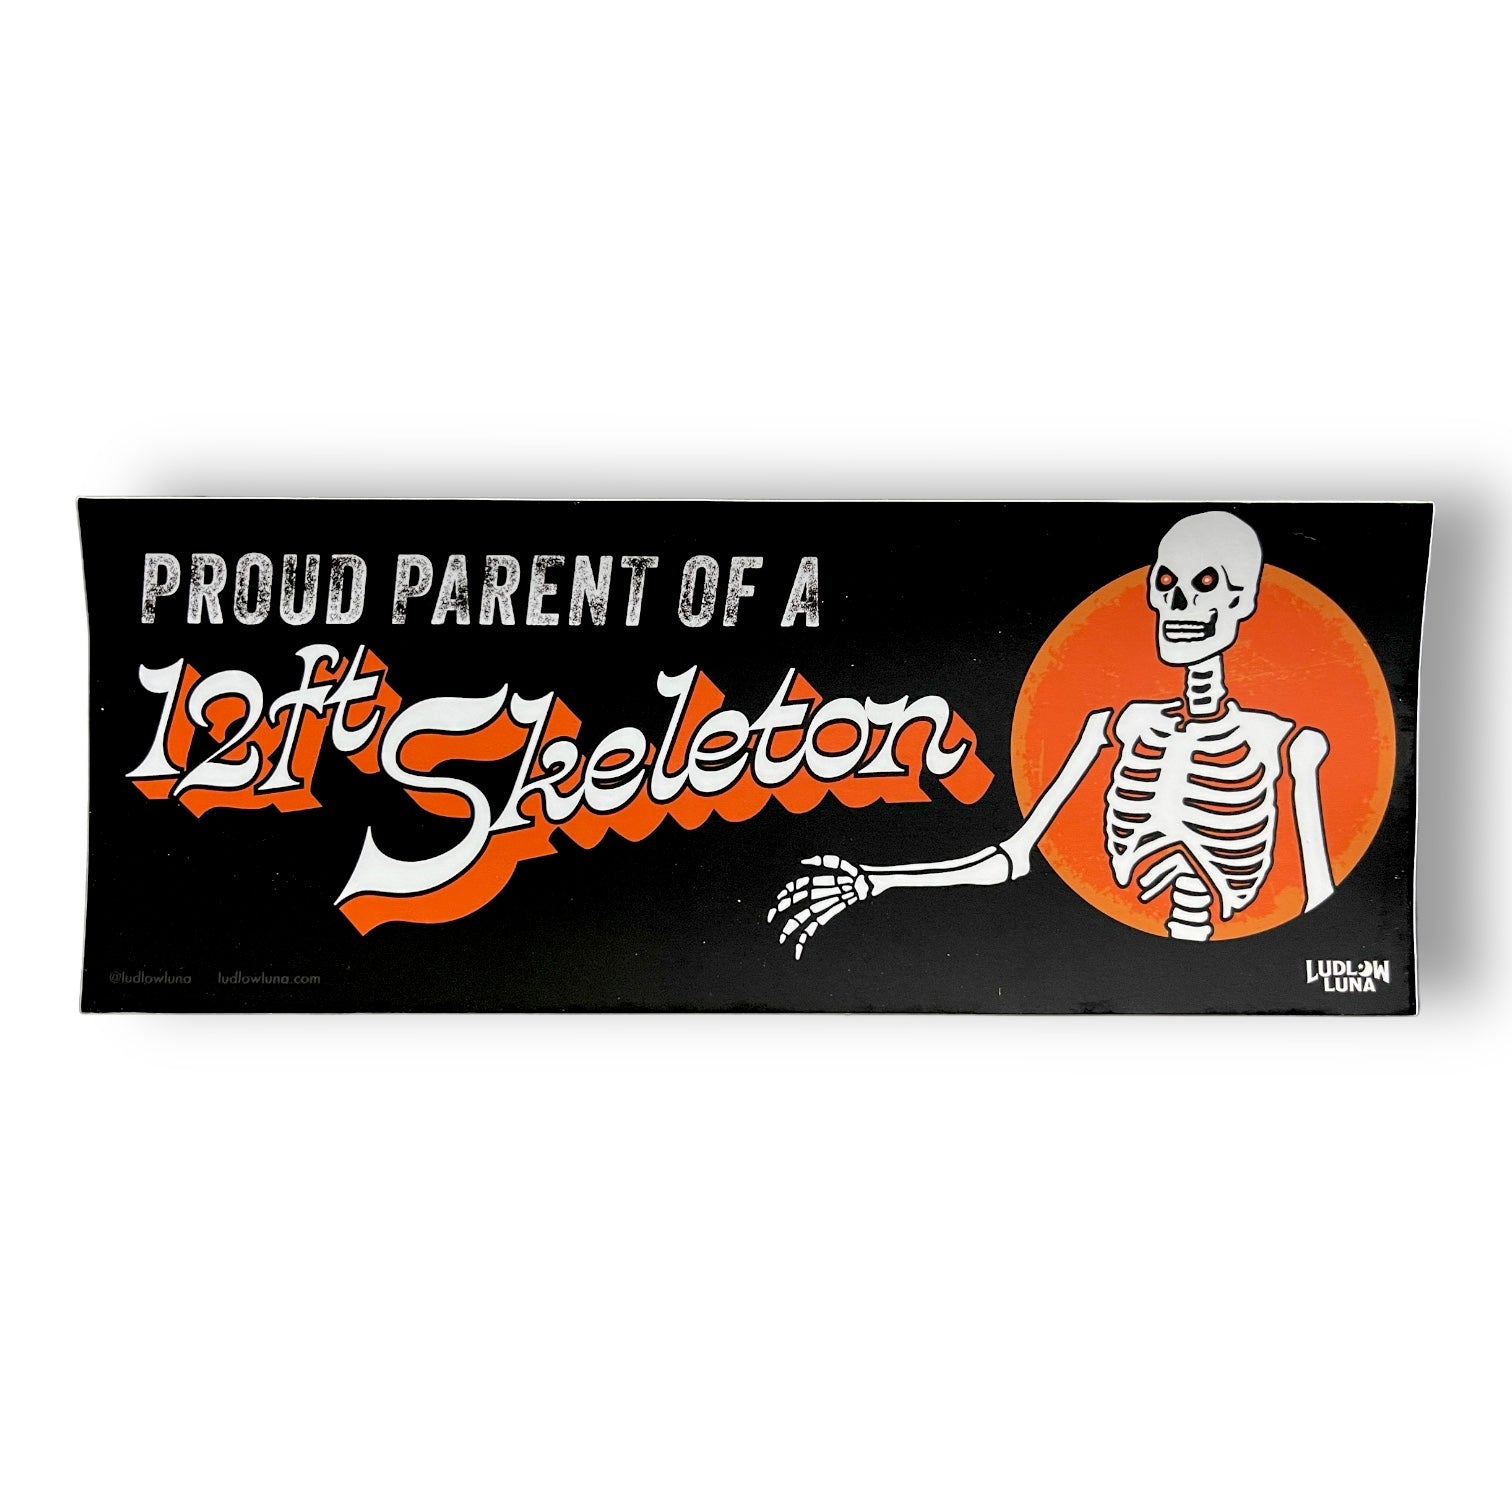 Proud Parent: 12-ft Skeleton Bumper Sticker